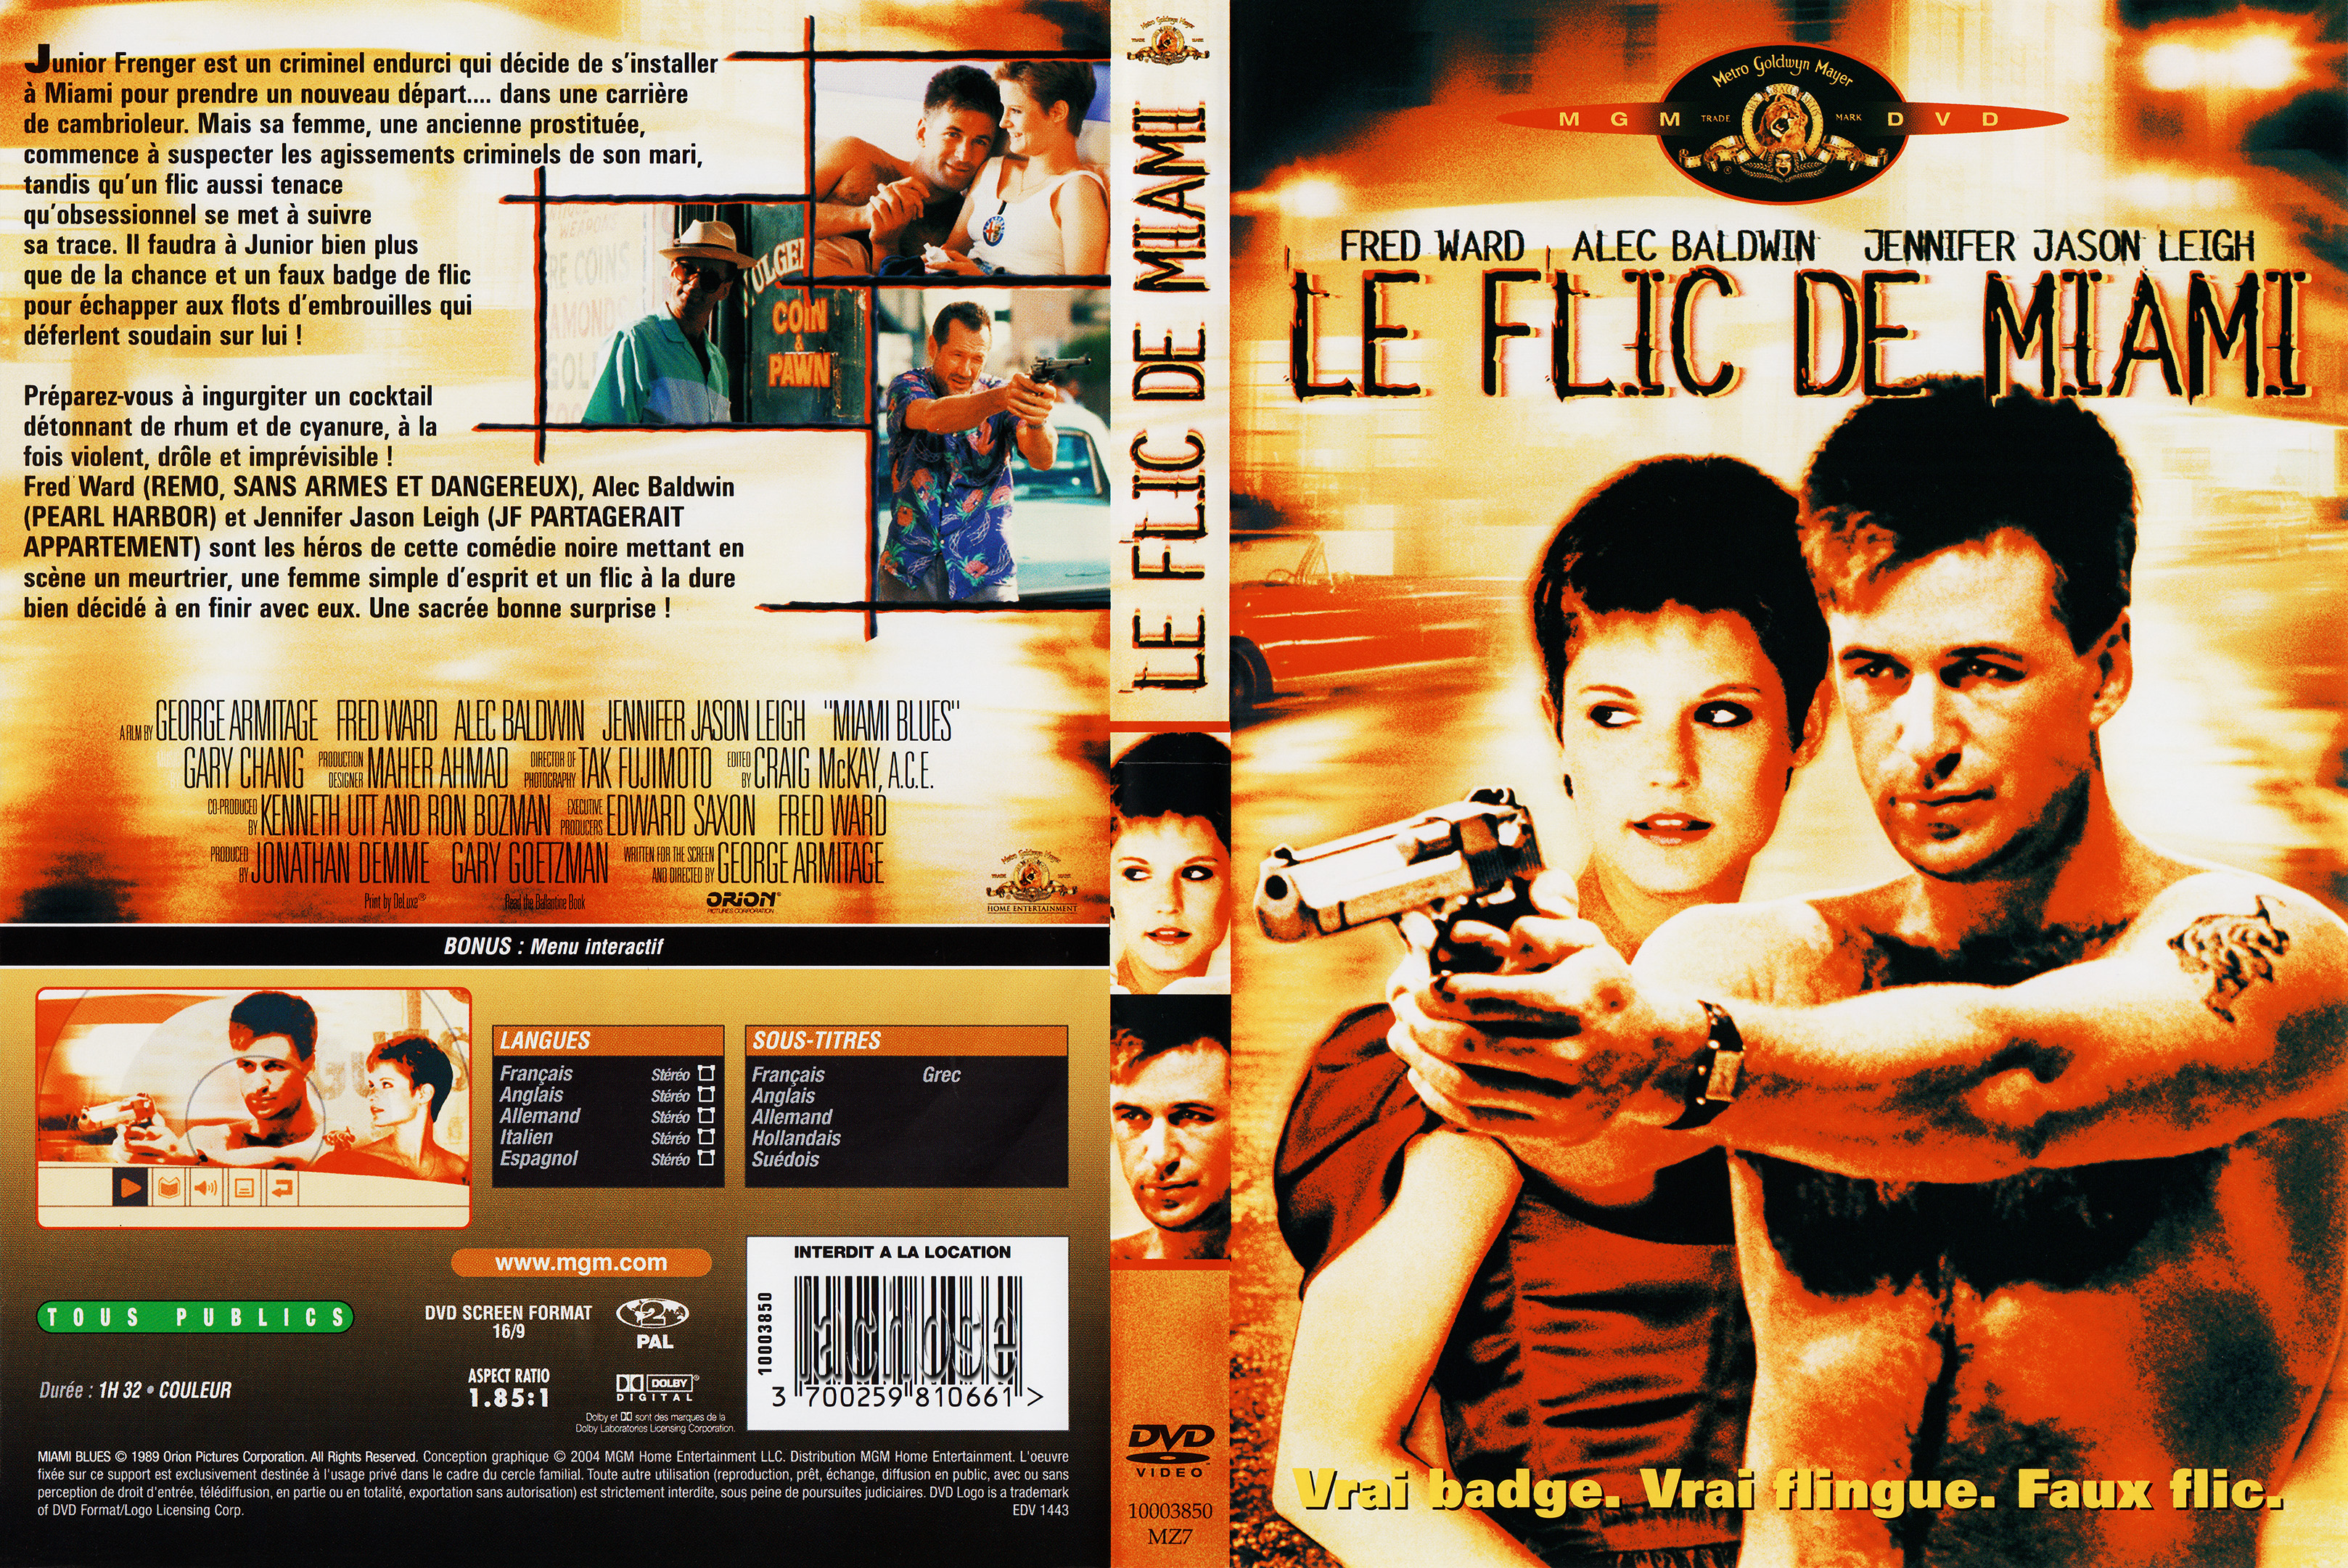 Jaquette DVD Le flic de miami